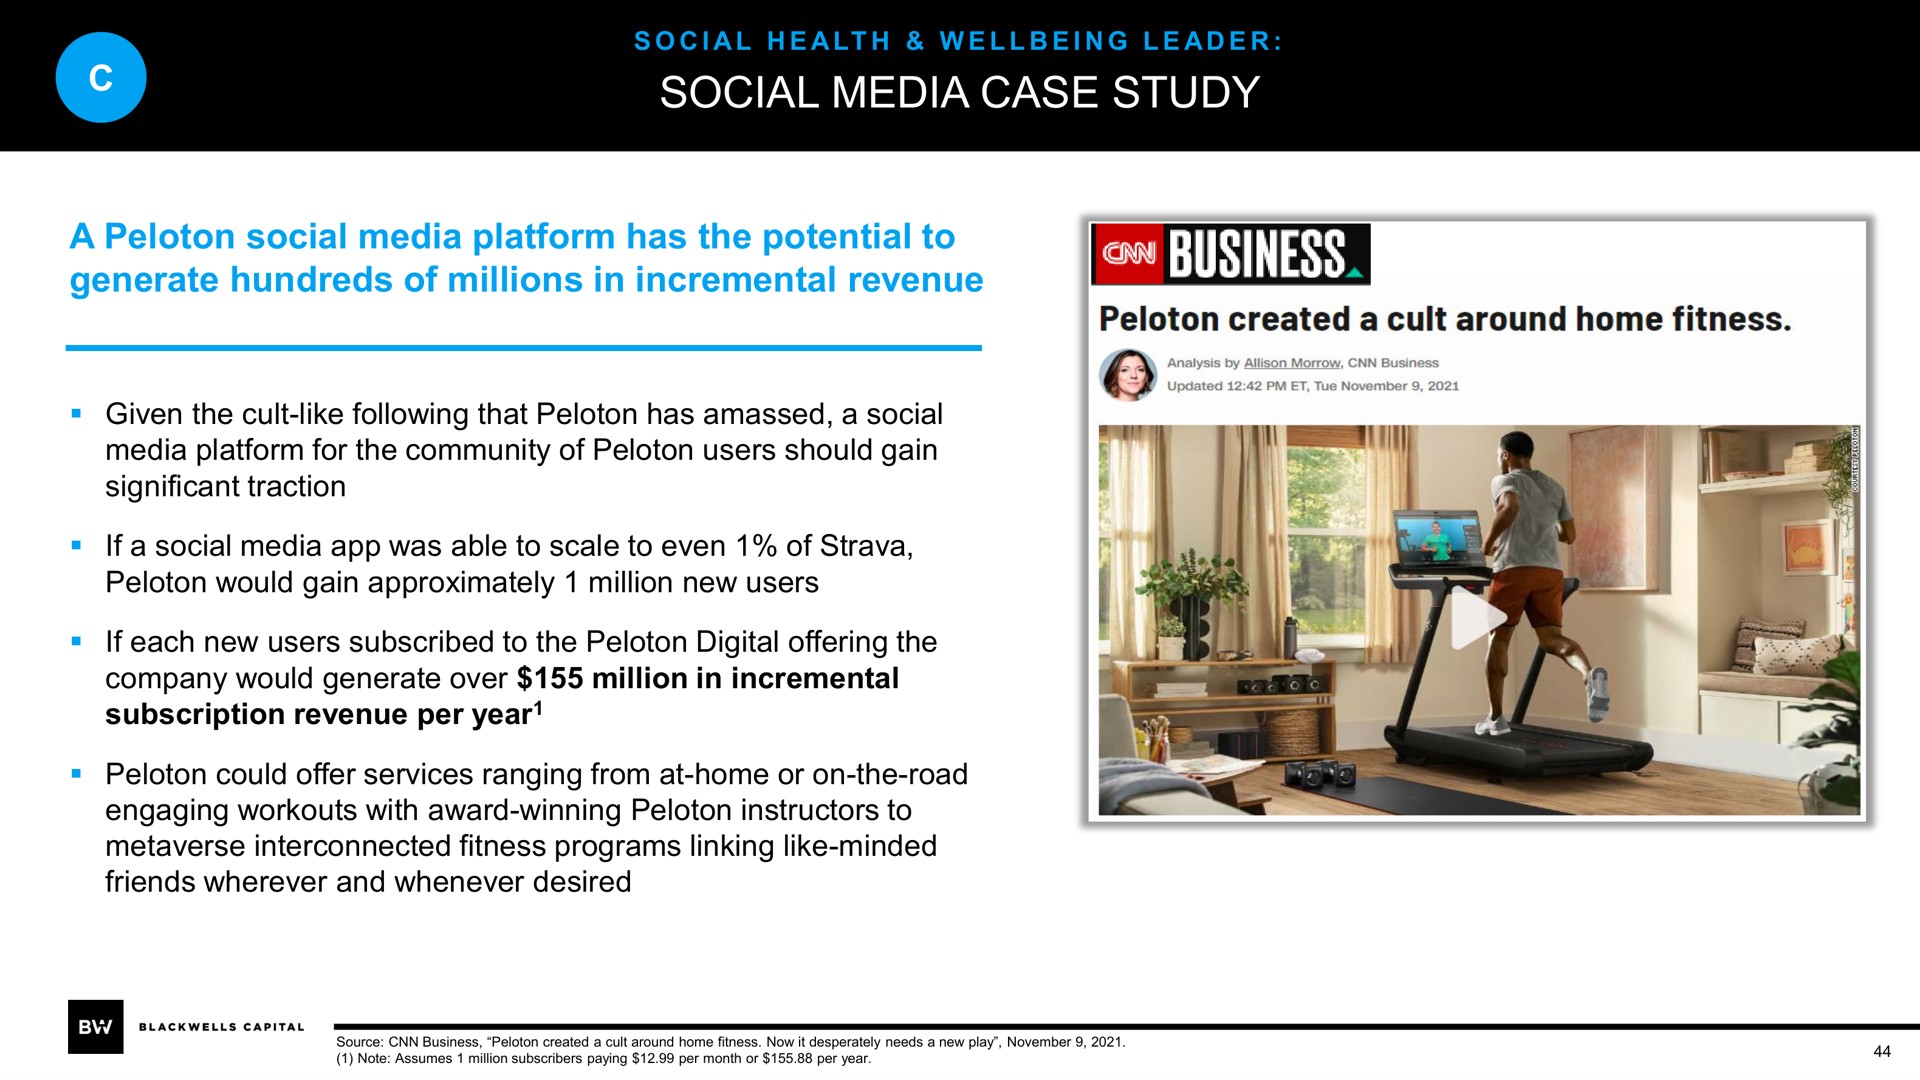 social media case study a peloton social media platform has the potential to generate hundreds of millions in incremental revenue | Blackwells Capital